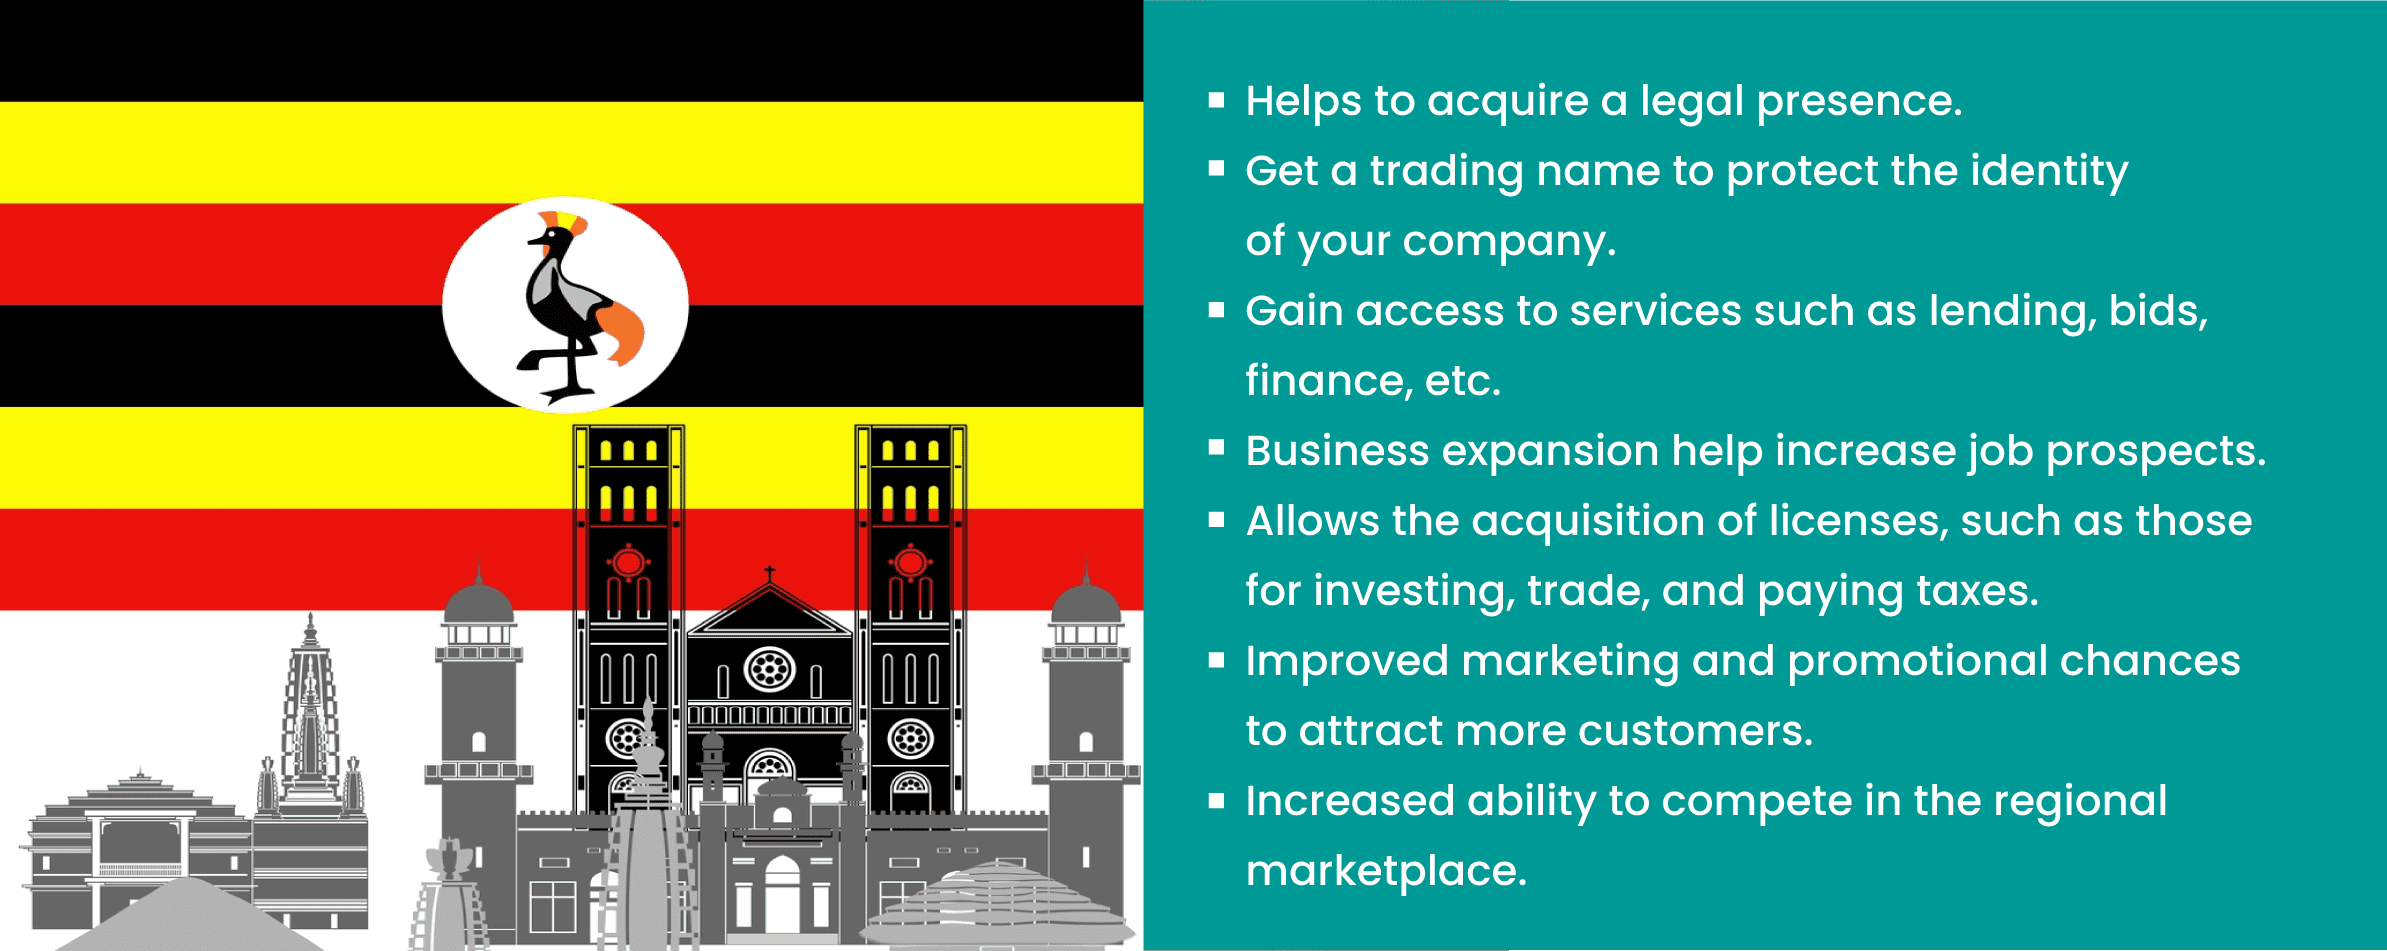 advantages of company registration in uganda